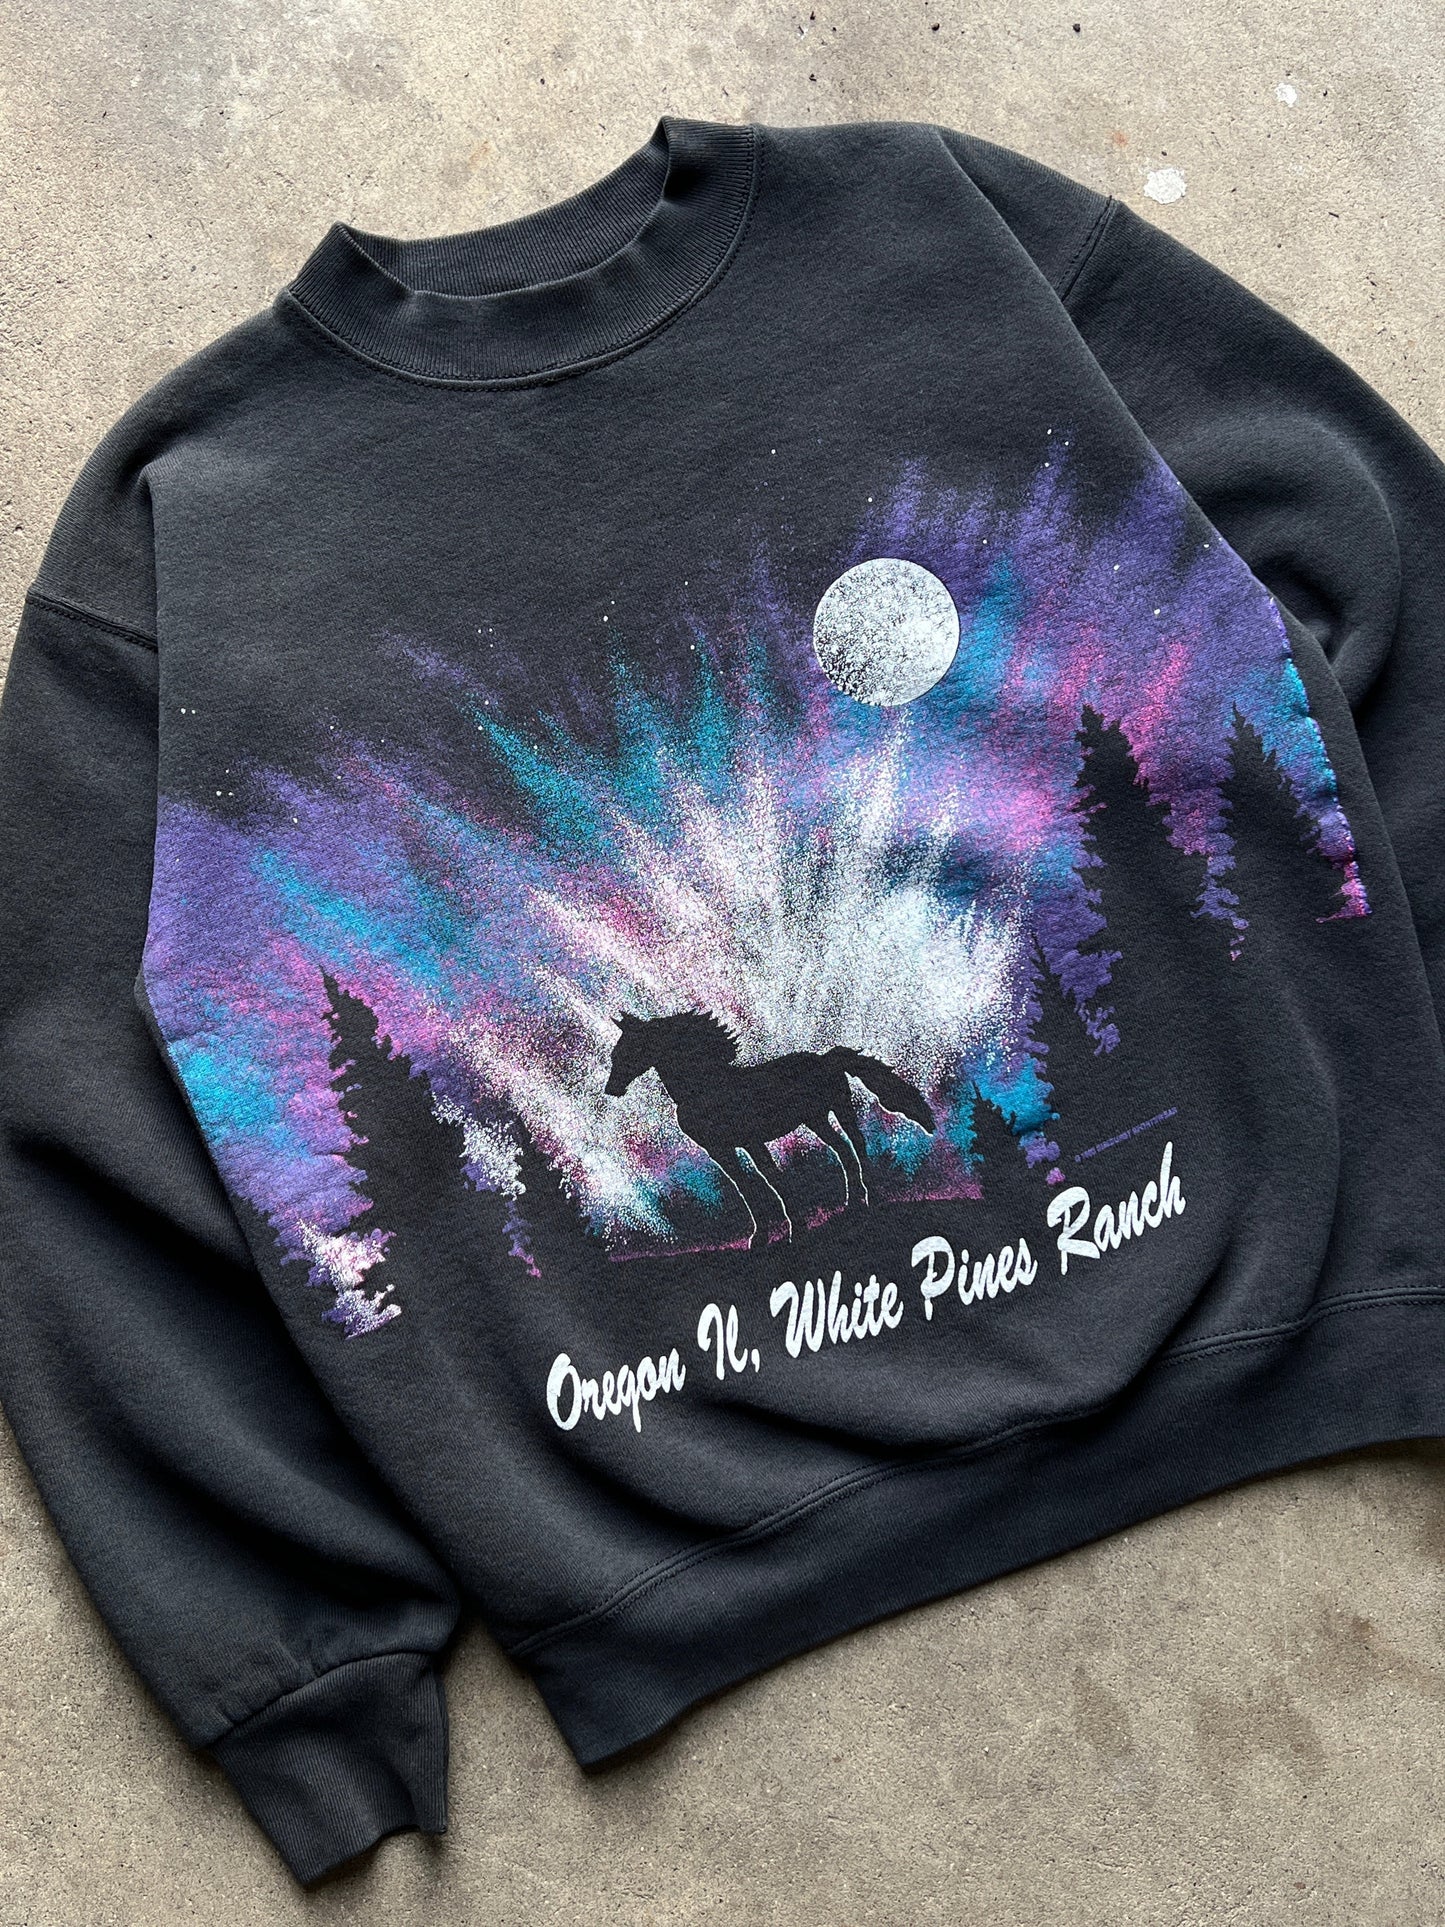 Vintage 1990s White Pines Ranch Starry Night Sweatshirt  - Shop ThreadCount Vintage Co.